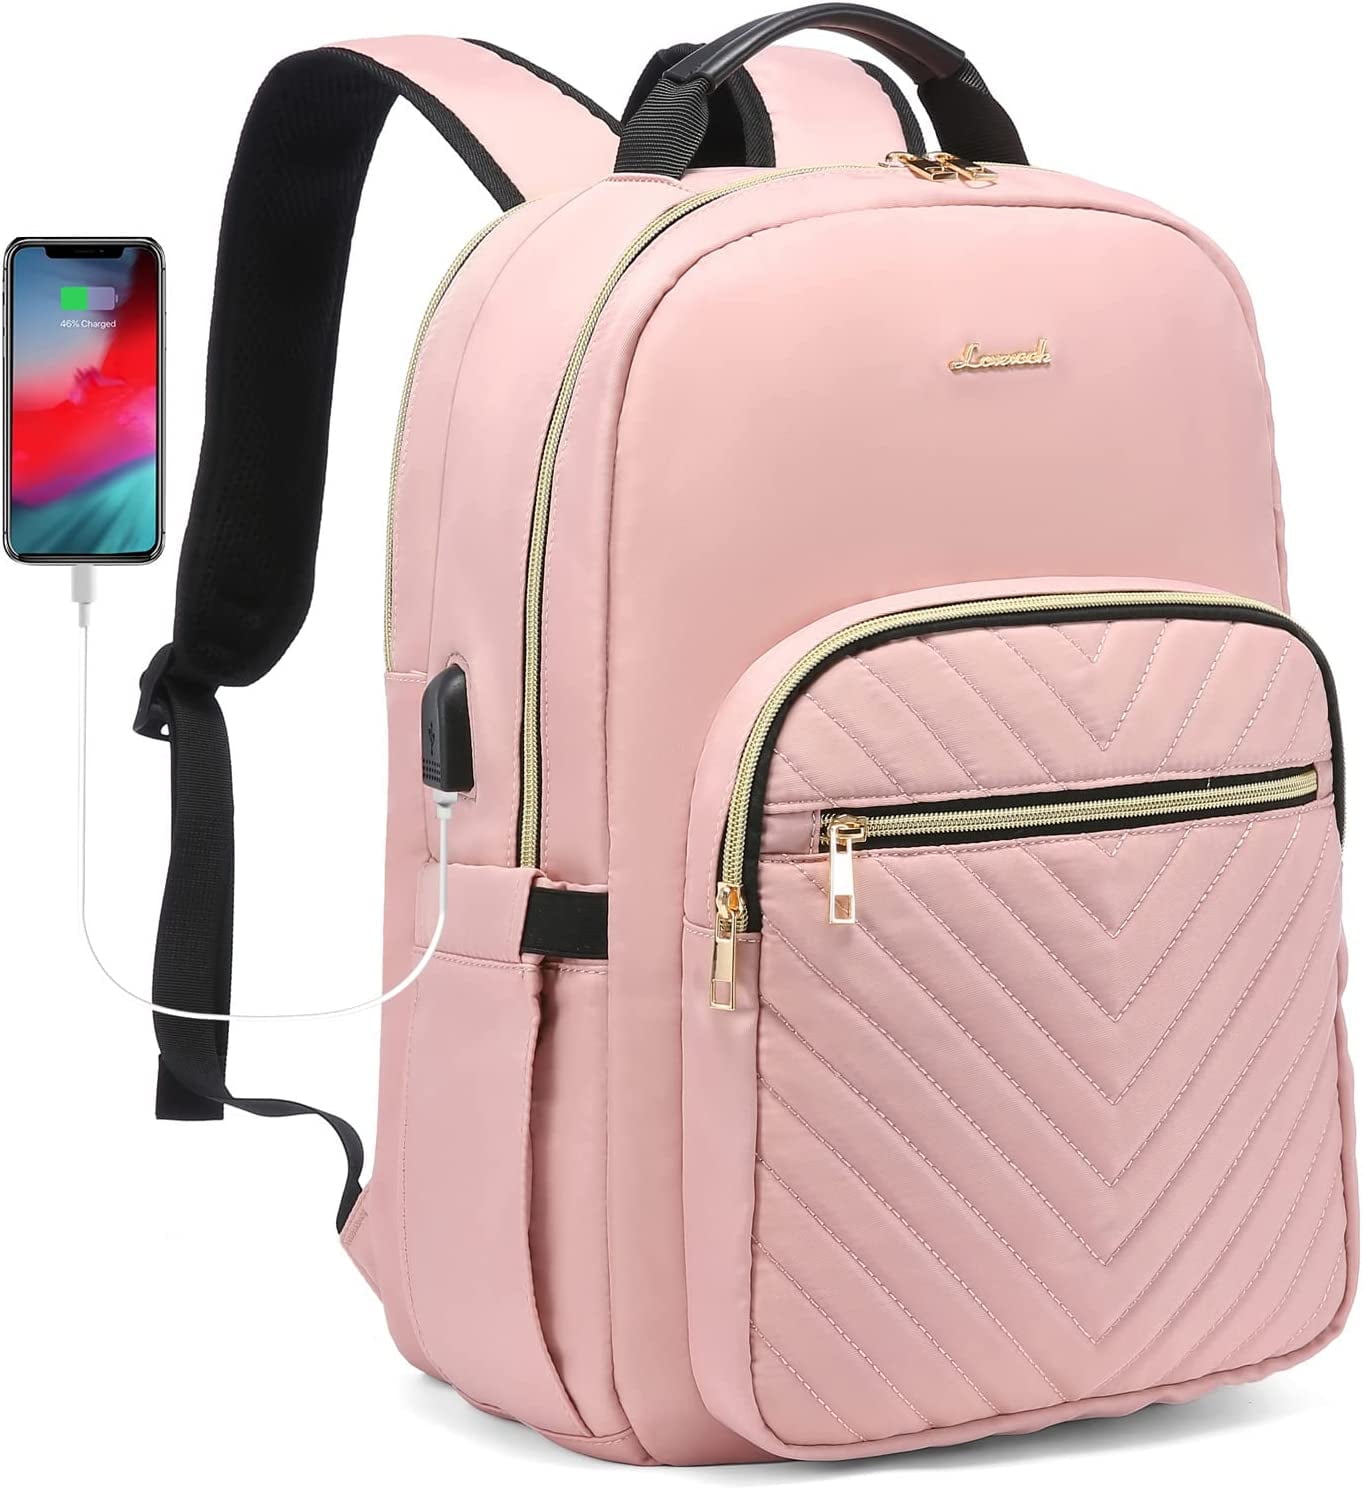 LOVEVOOK Laptop Backpack Women 15 6 Quilted Travel Anti Thief Pocket Teacher Book Bag Nurse Purse USB Light Pink a982ac2f 6ded 4ccb 9d8e 9589a3b7e26a.b841c150d70c33623a13b9831215b1e8